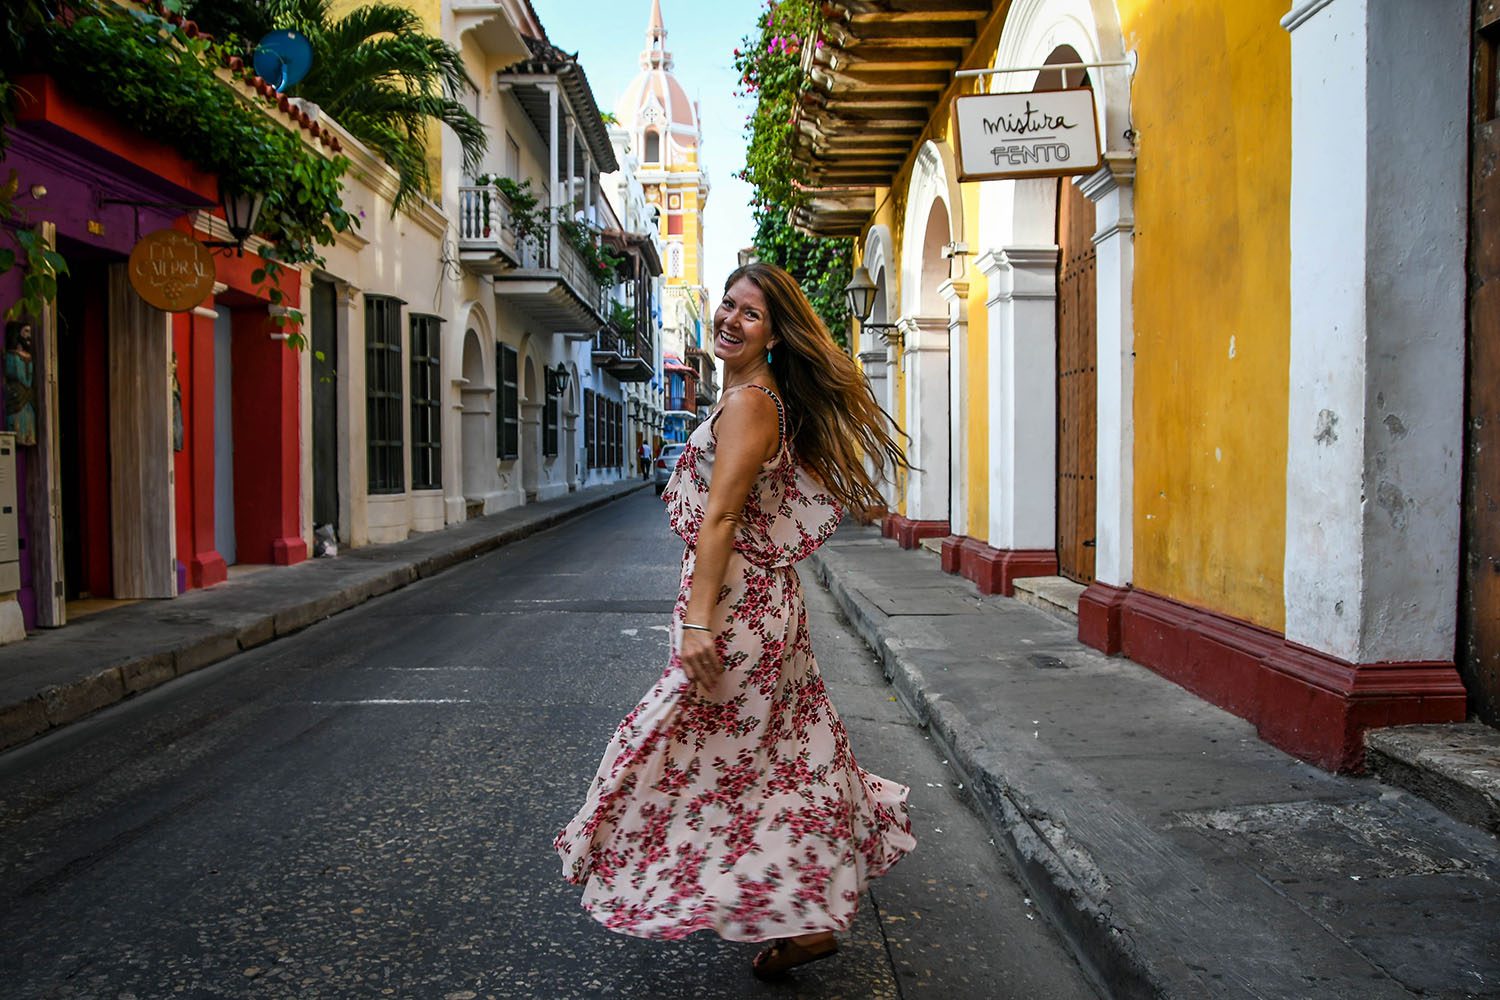 A woman wearing a floral dress